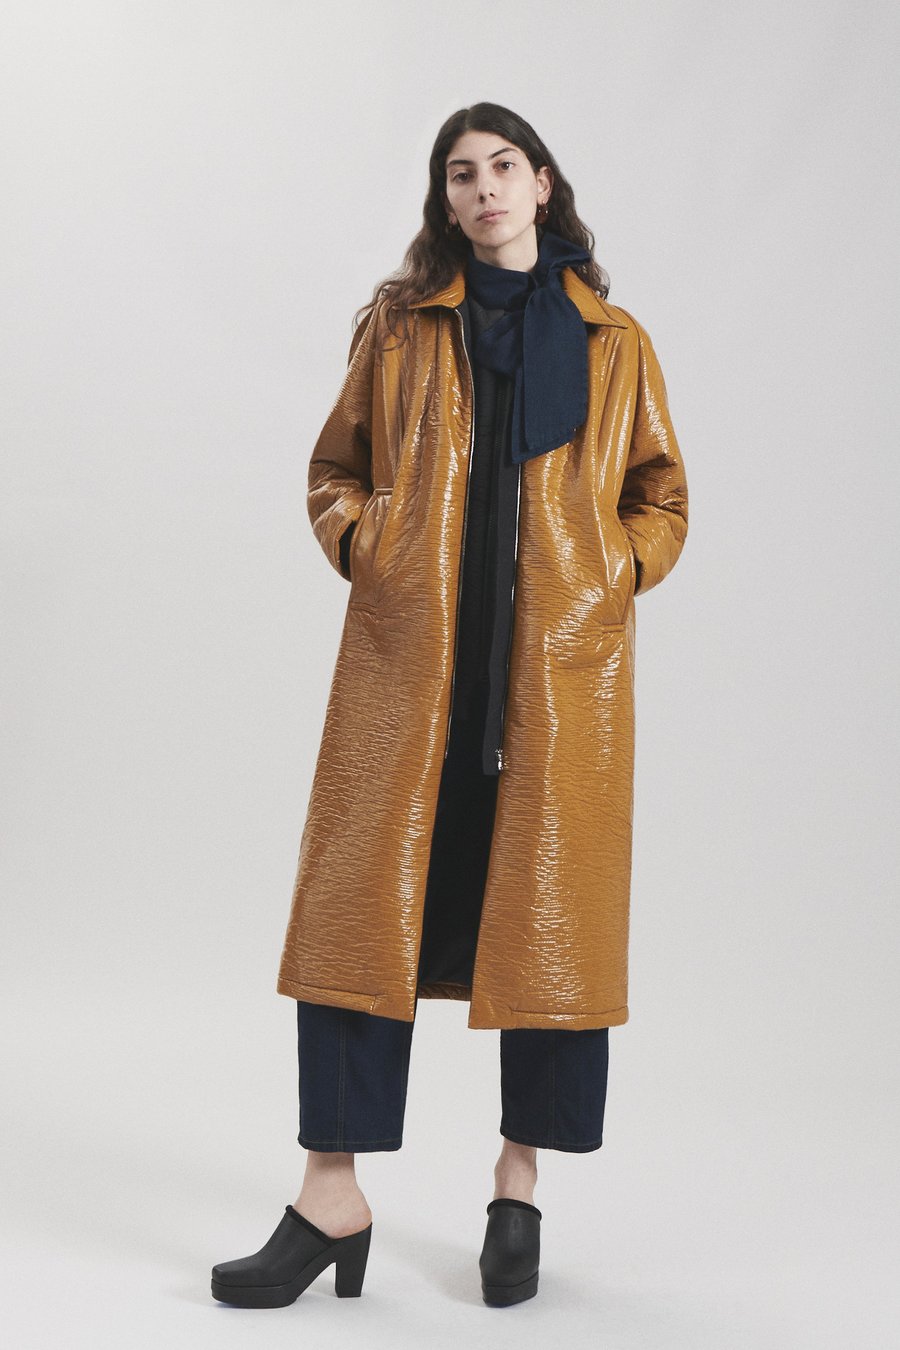 Rachel Comey - Mare Coat : Turmeric